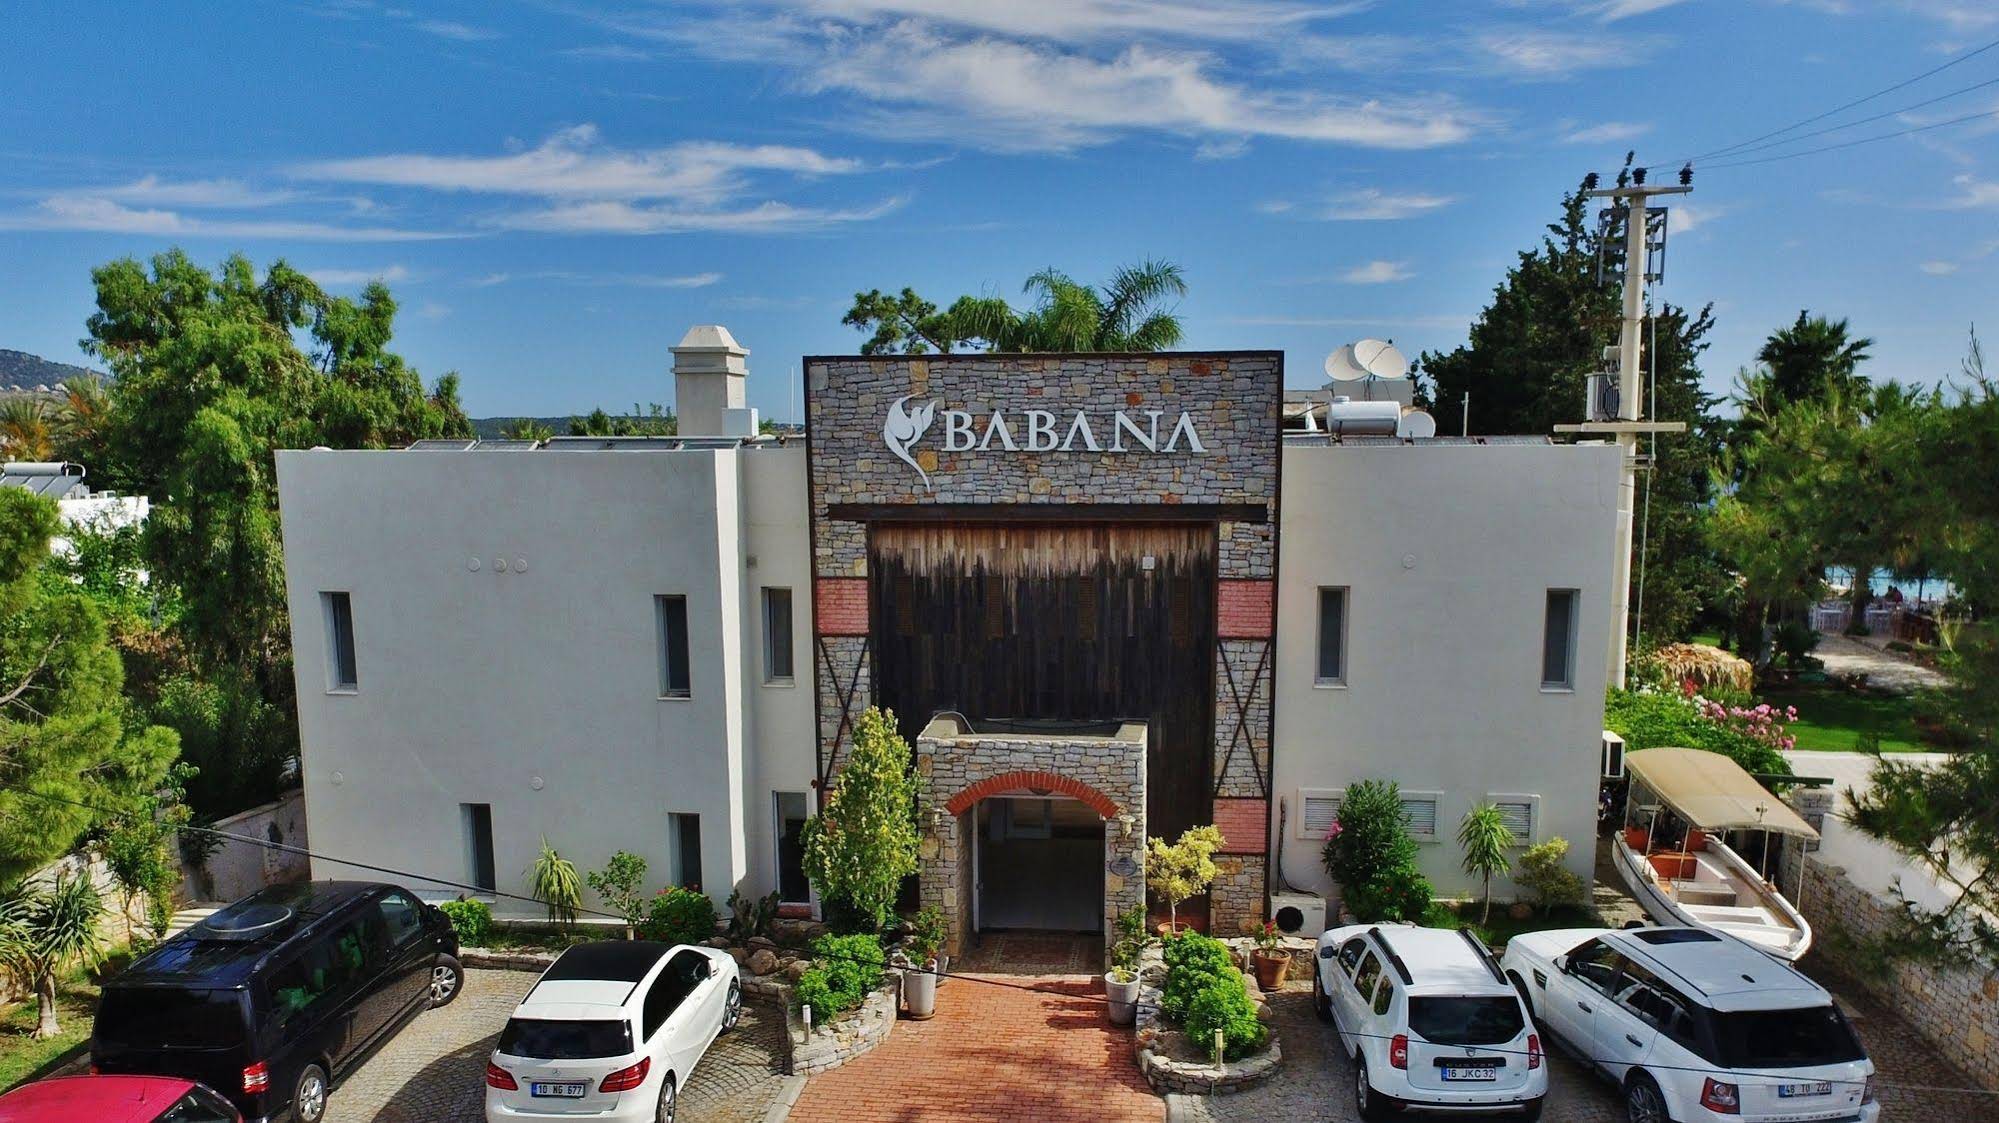 Babana Hotel